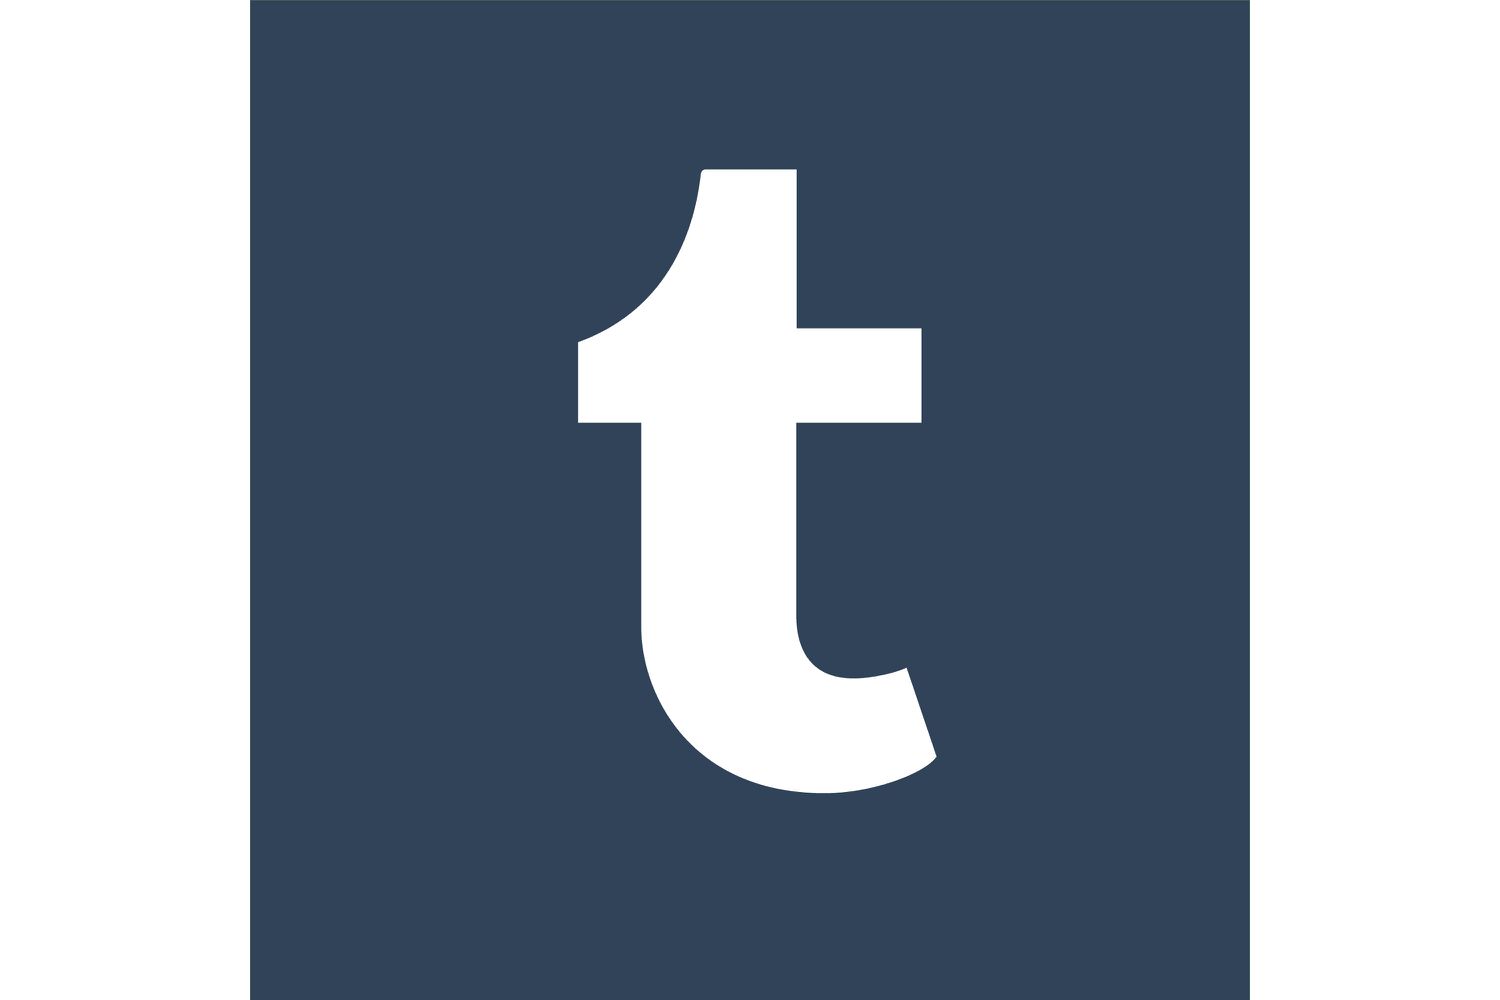 tumblr-logo